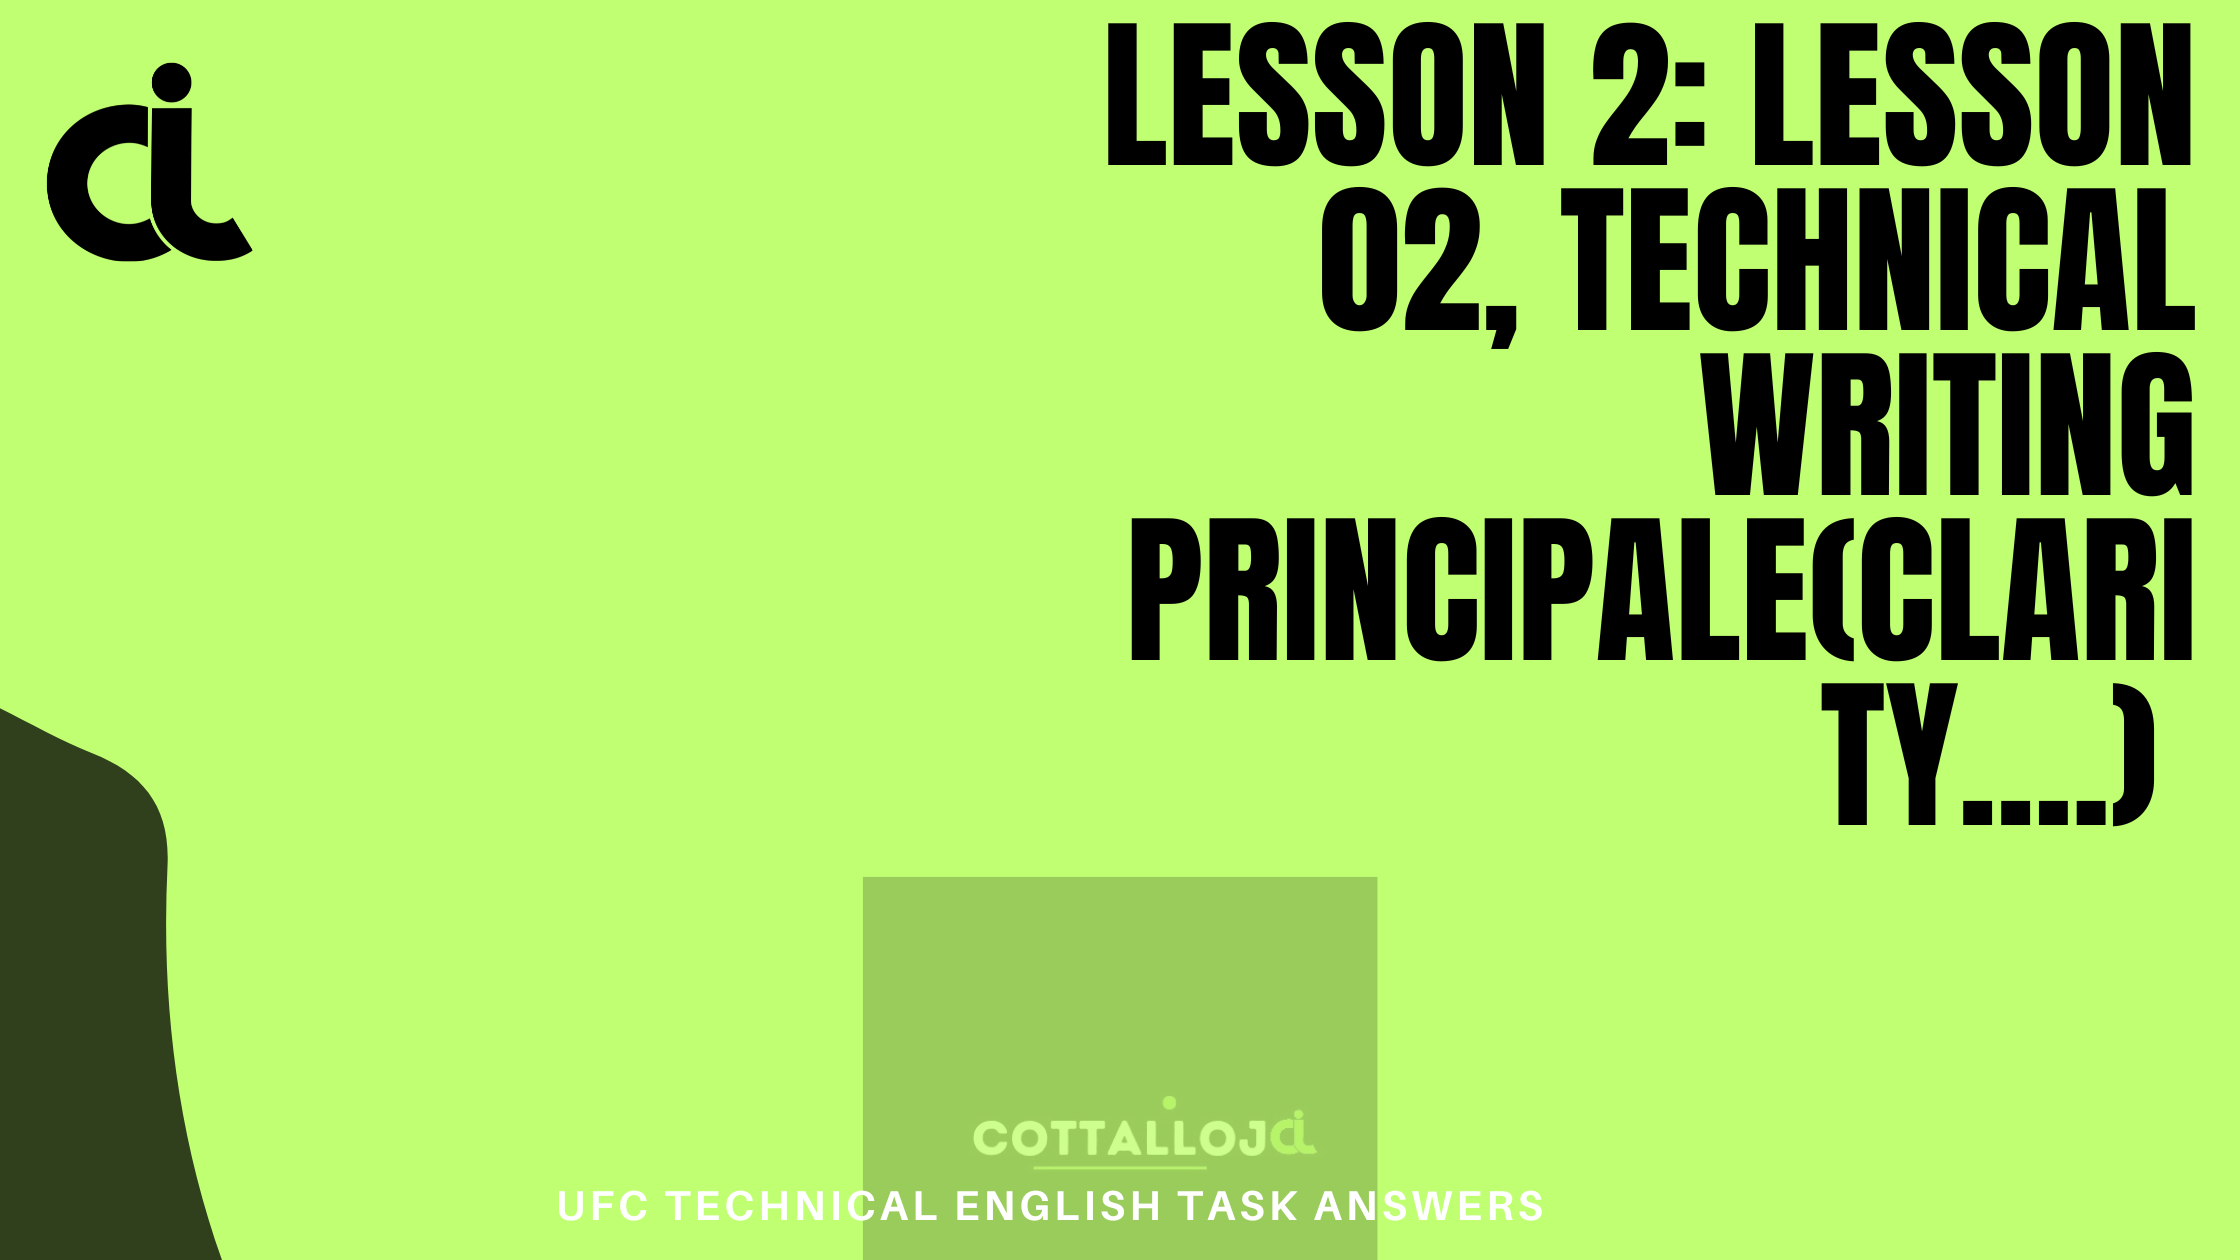 Lesson 02, technical writing principale(clarity....)